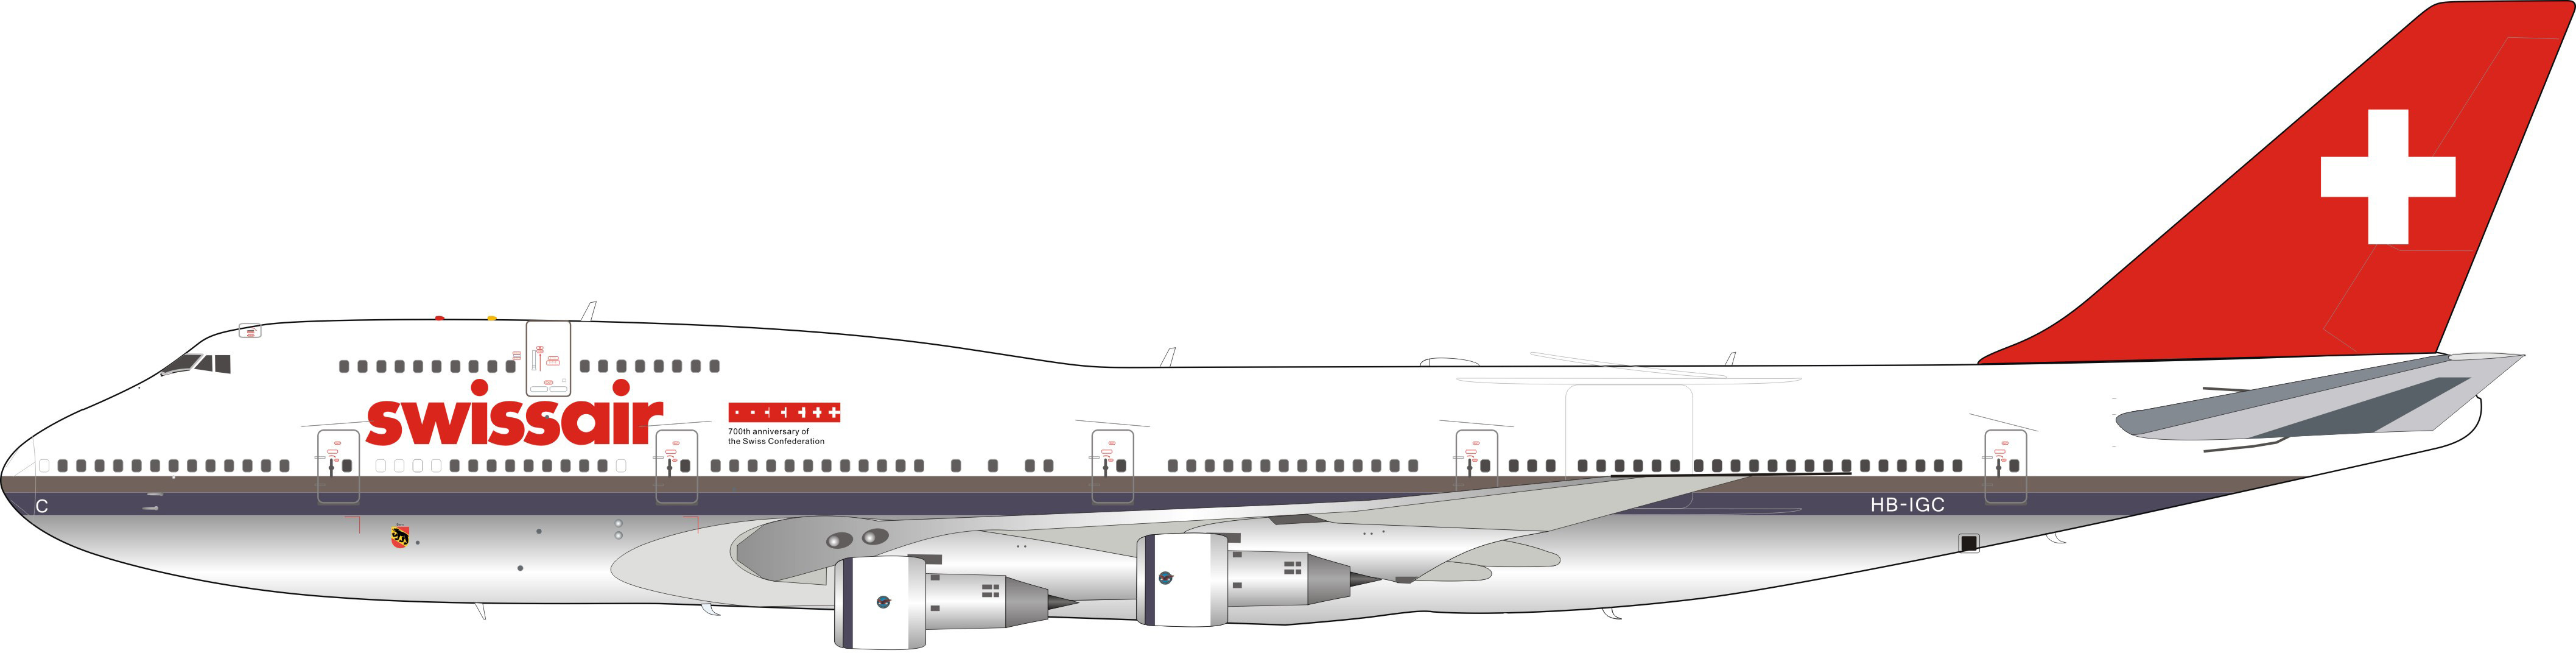 1:200 Swissair Boeing 747-300 HB-IGC